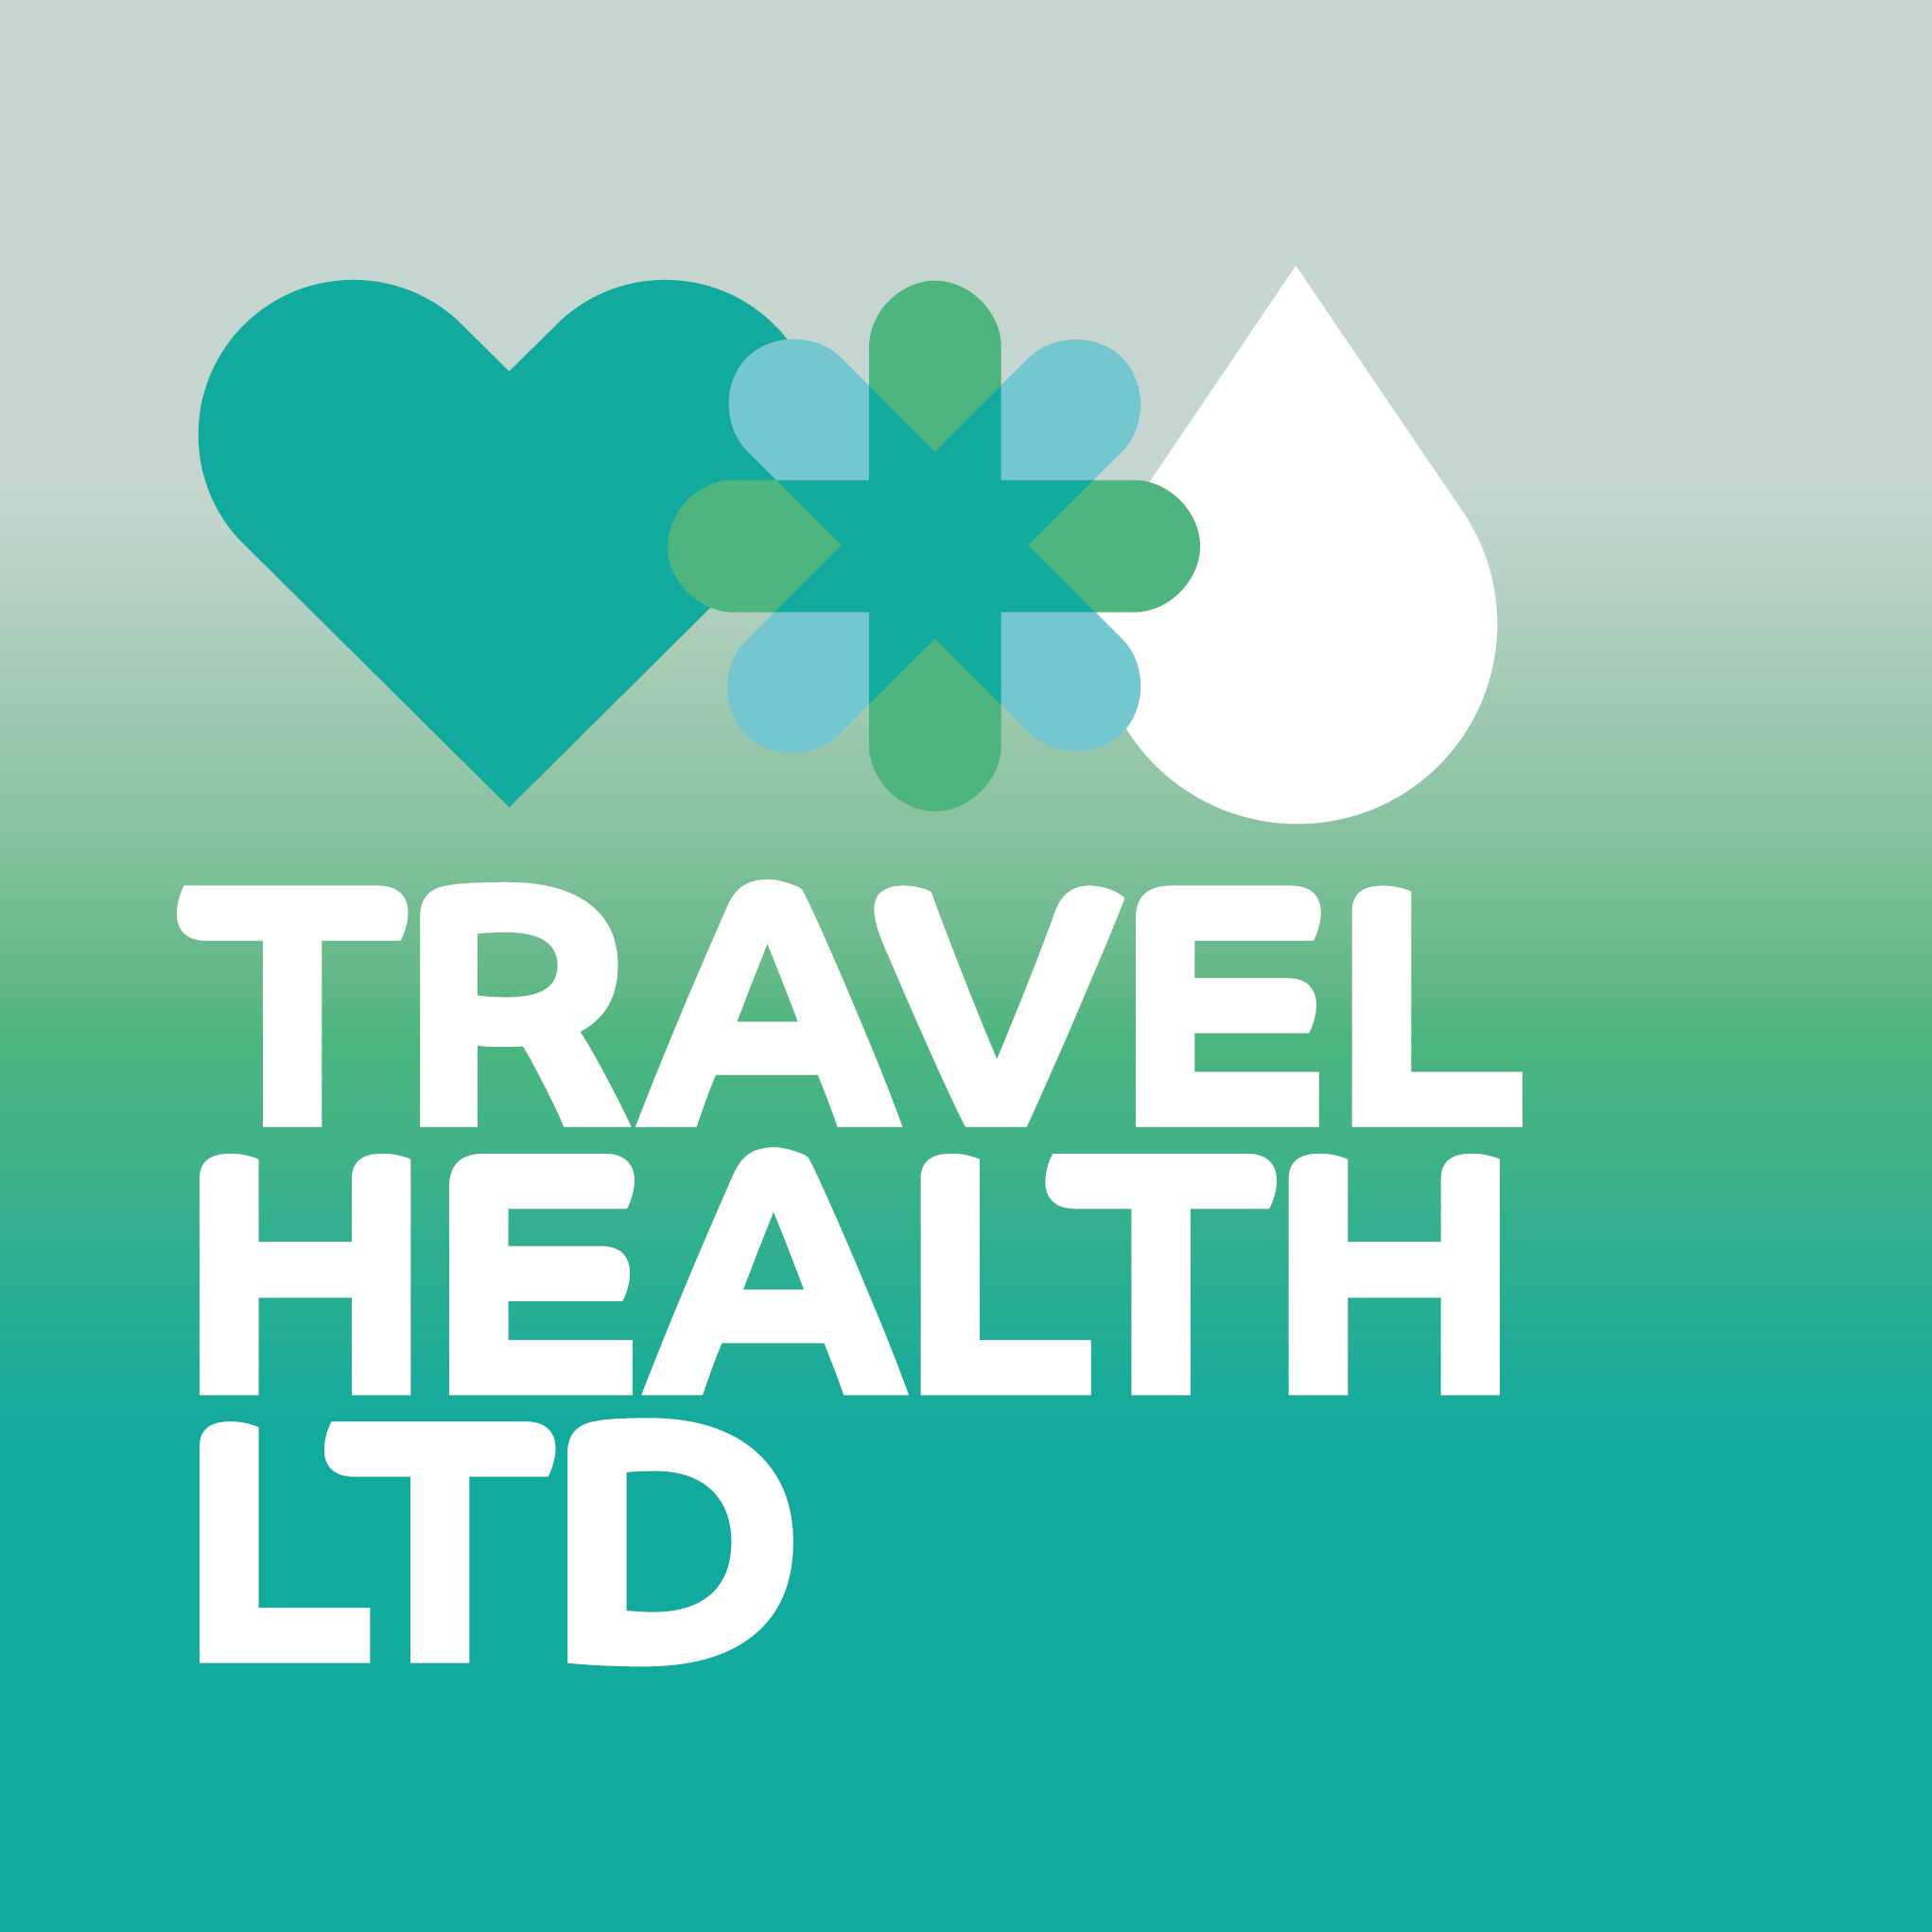 travel health network